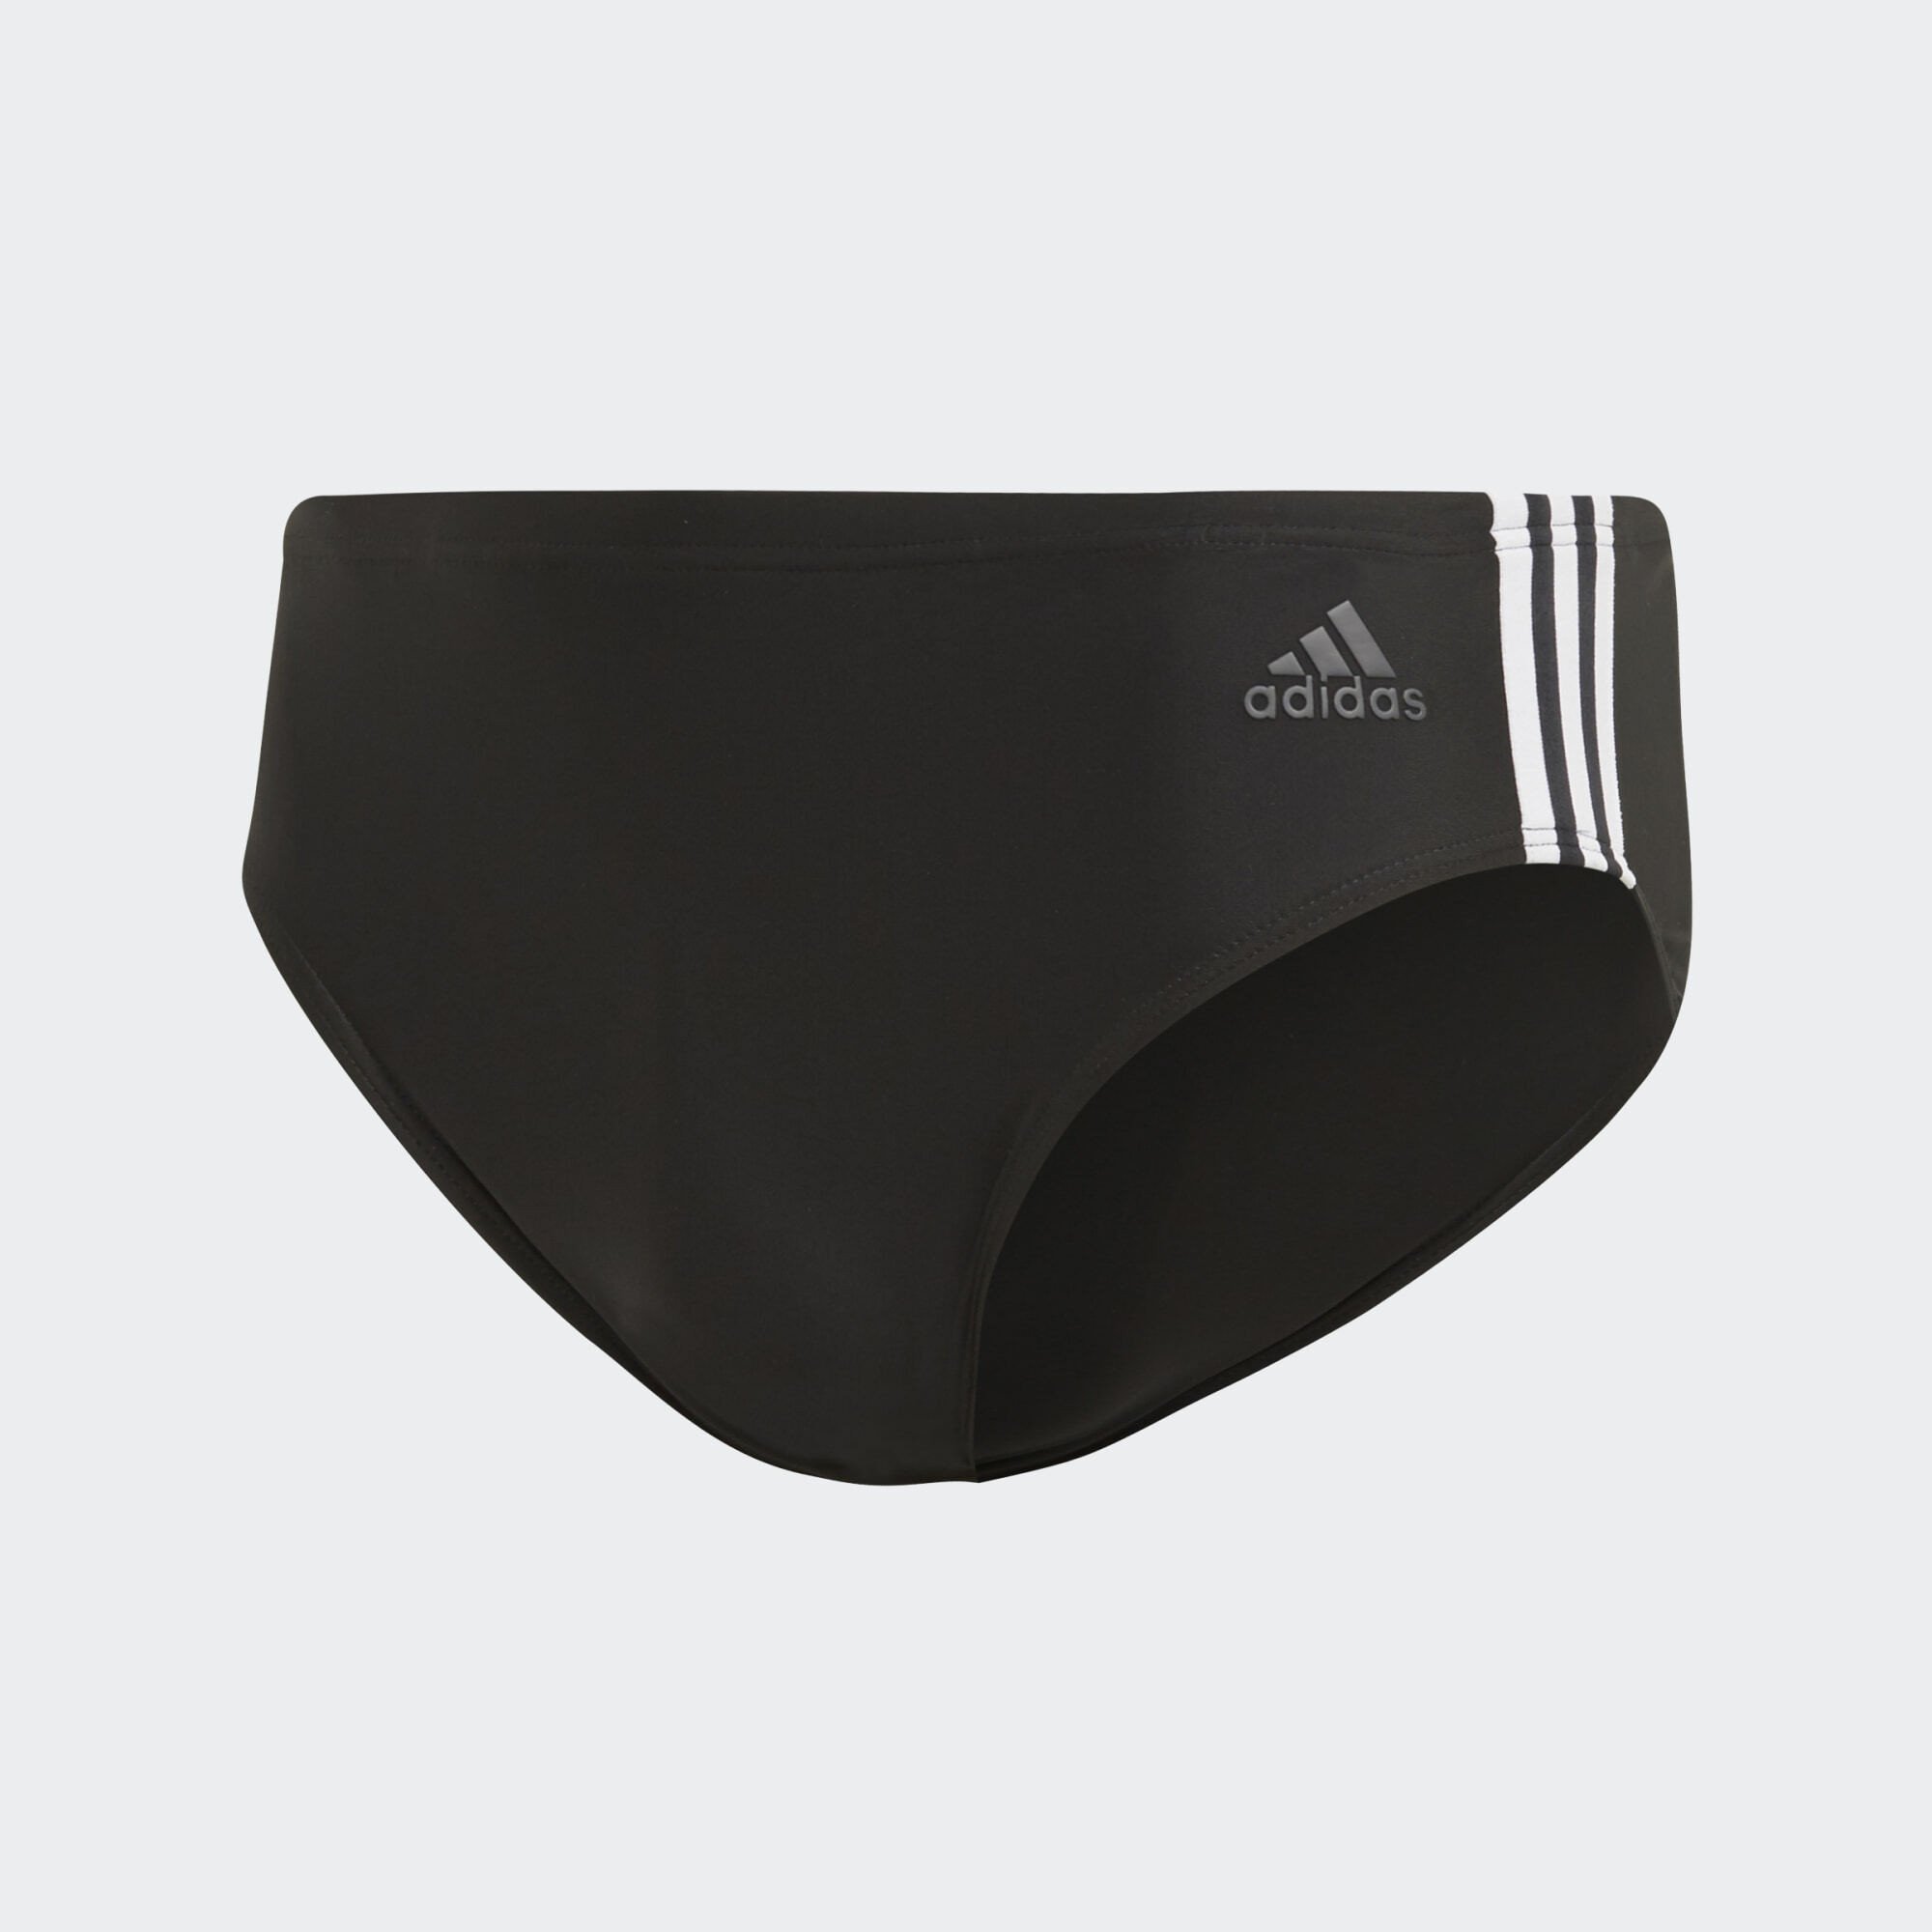 Adidas Fitness 3-Stripes Swim Trunks - Ανδρικό Μαγιό (9000023351_1480)